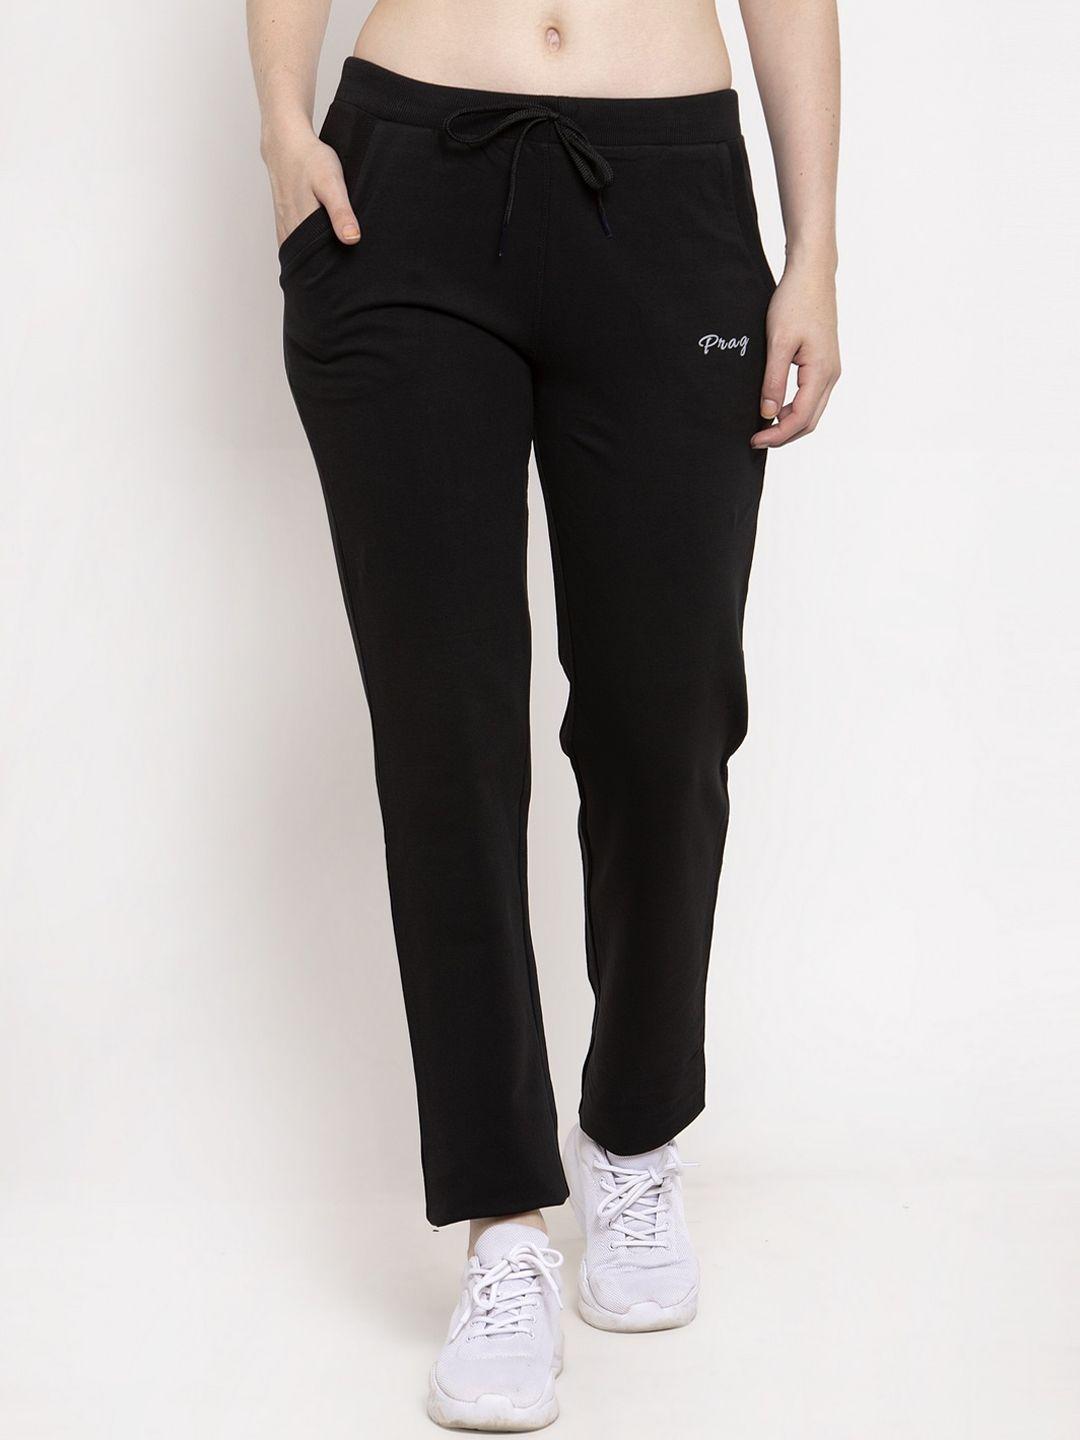 prag & co women black solid slim-fit track pants